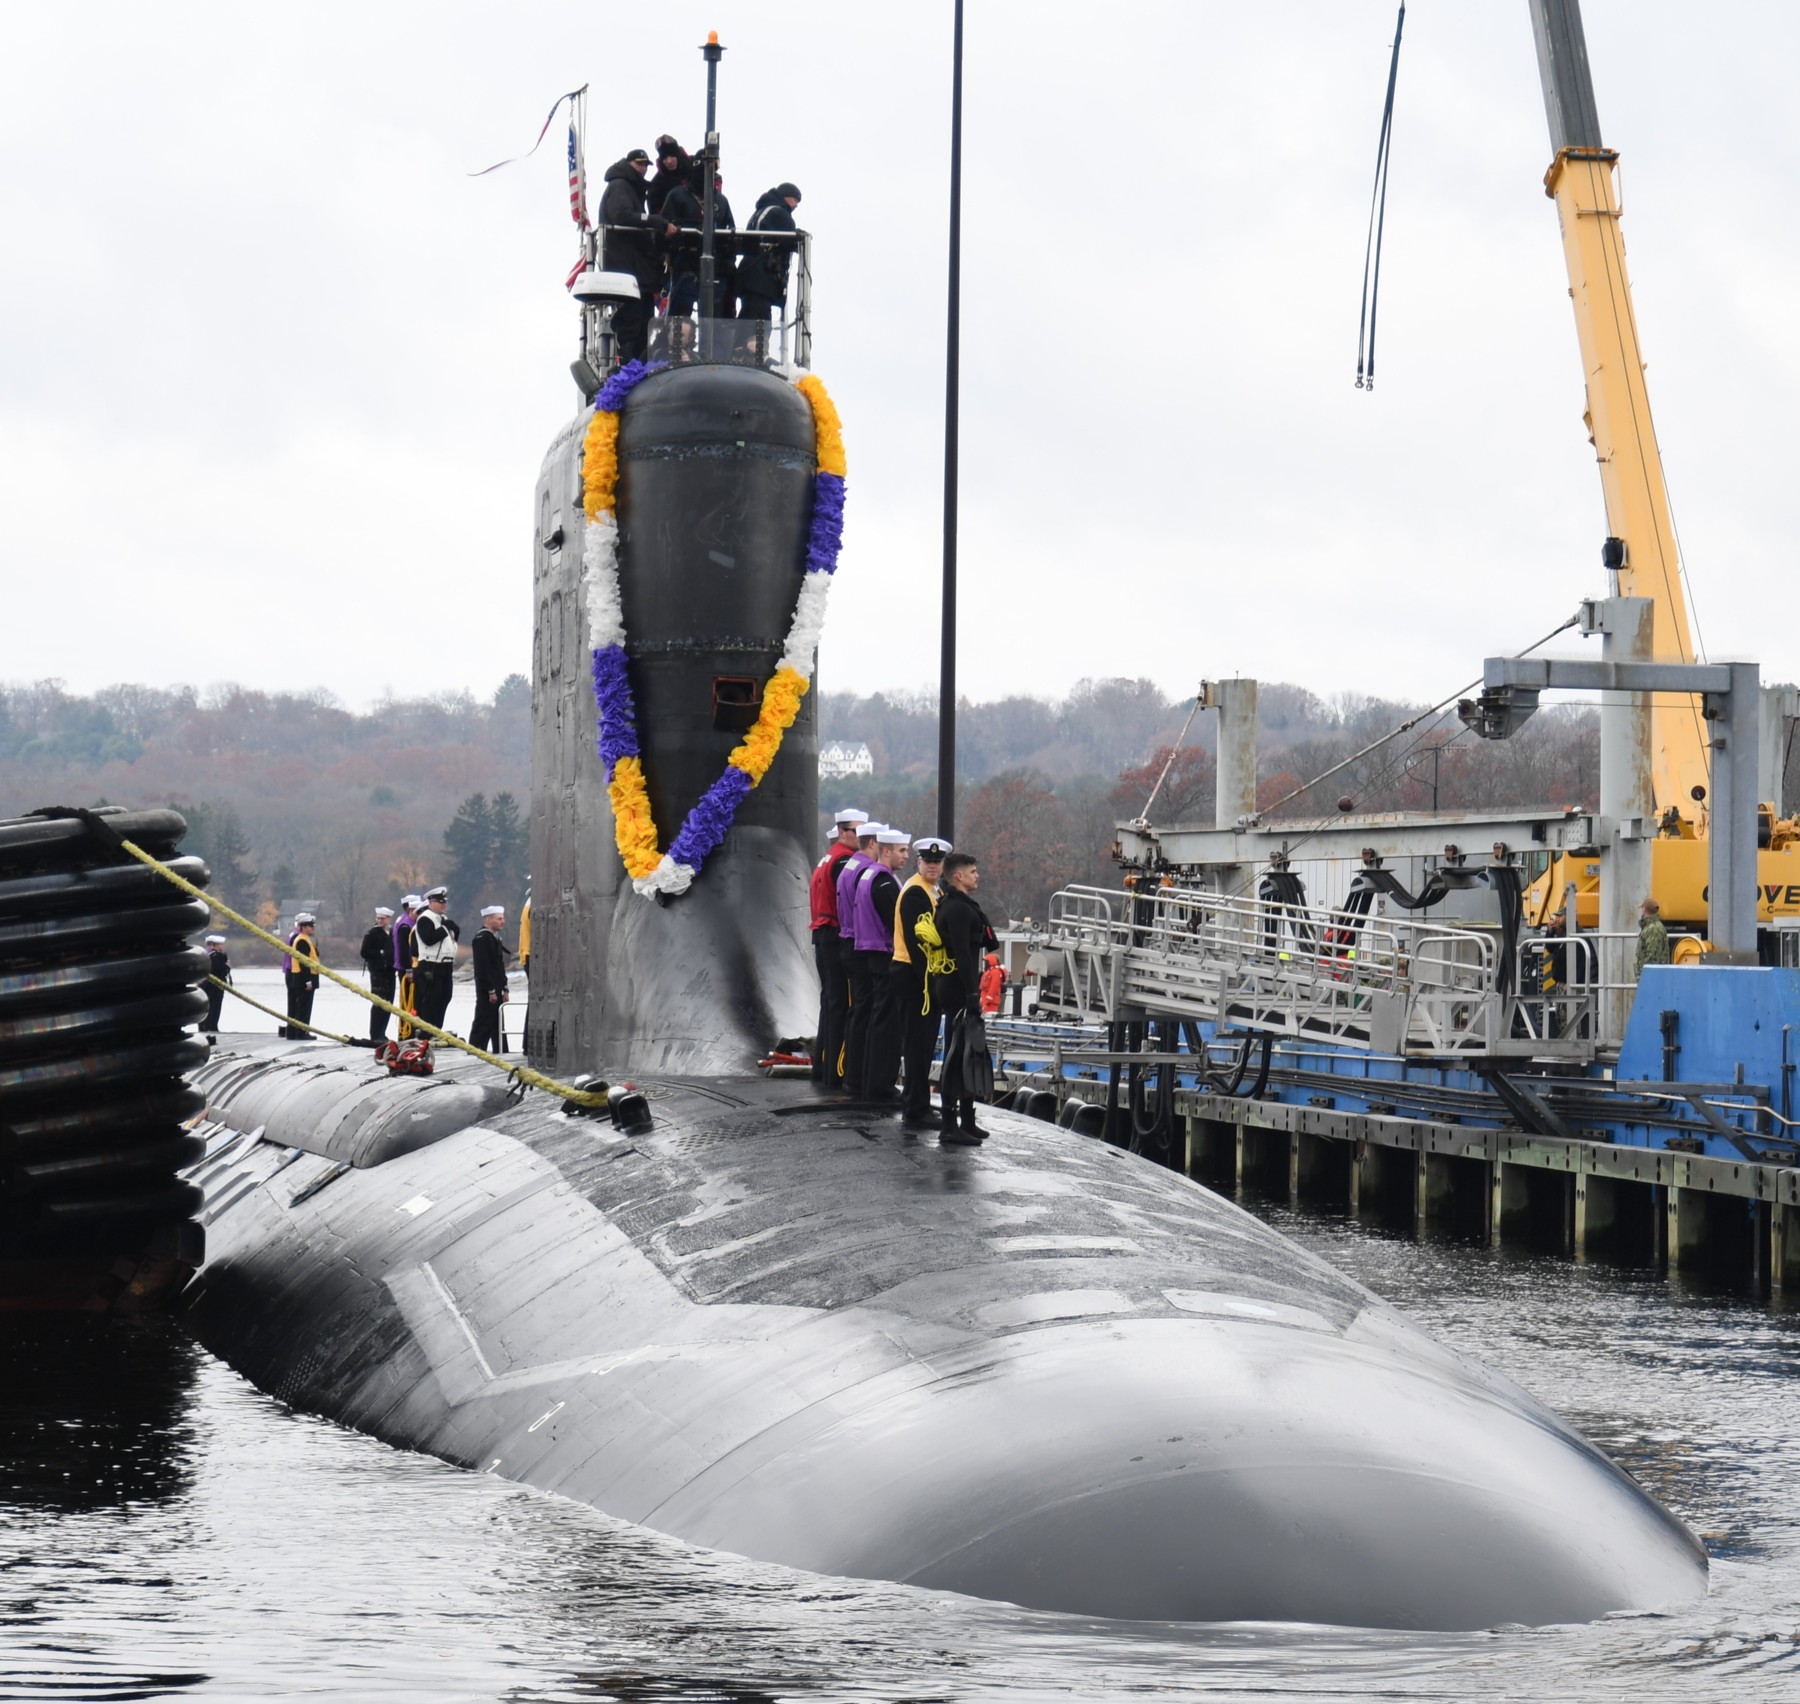 ssn-783 uss minnesota virginia class attack submarine us navy 40 subase new london groton connecticut